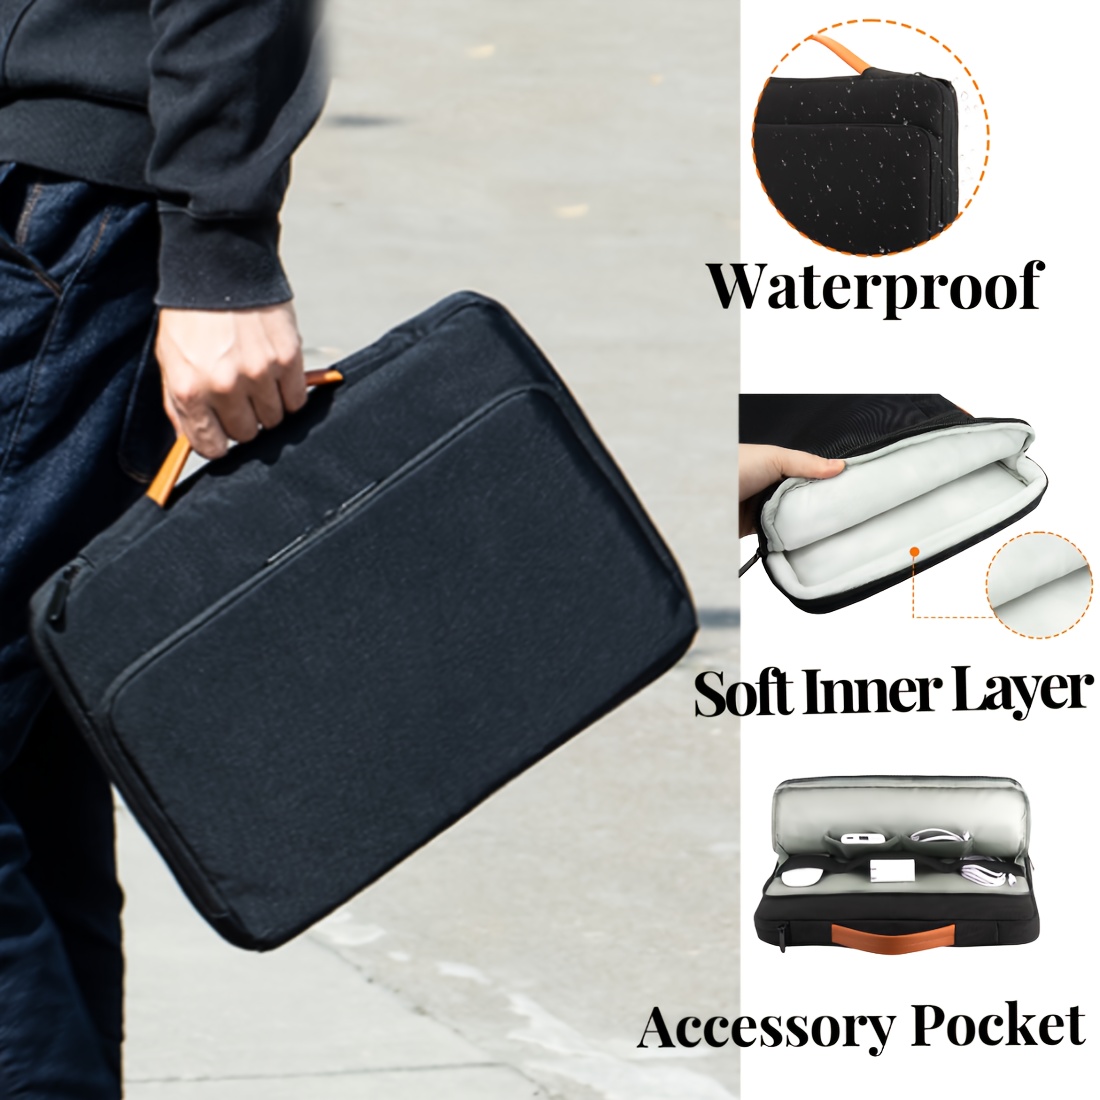 Shockproof Notebook Handbag Laptop Protective Sleeve Carrying Case